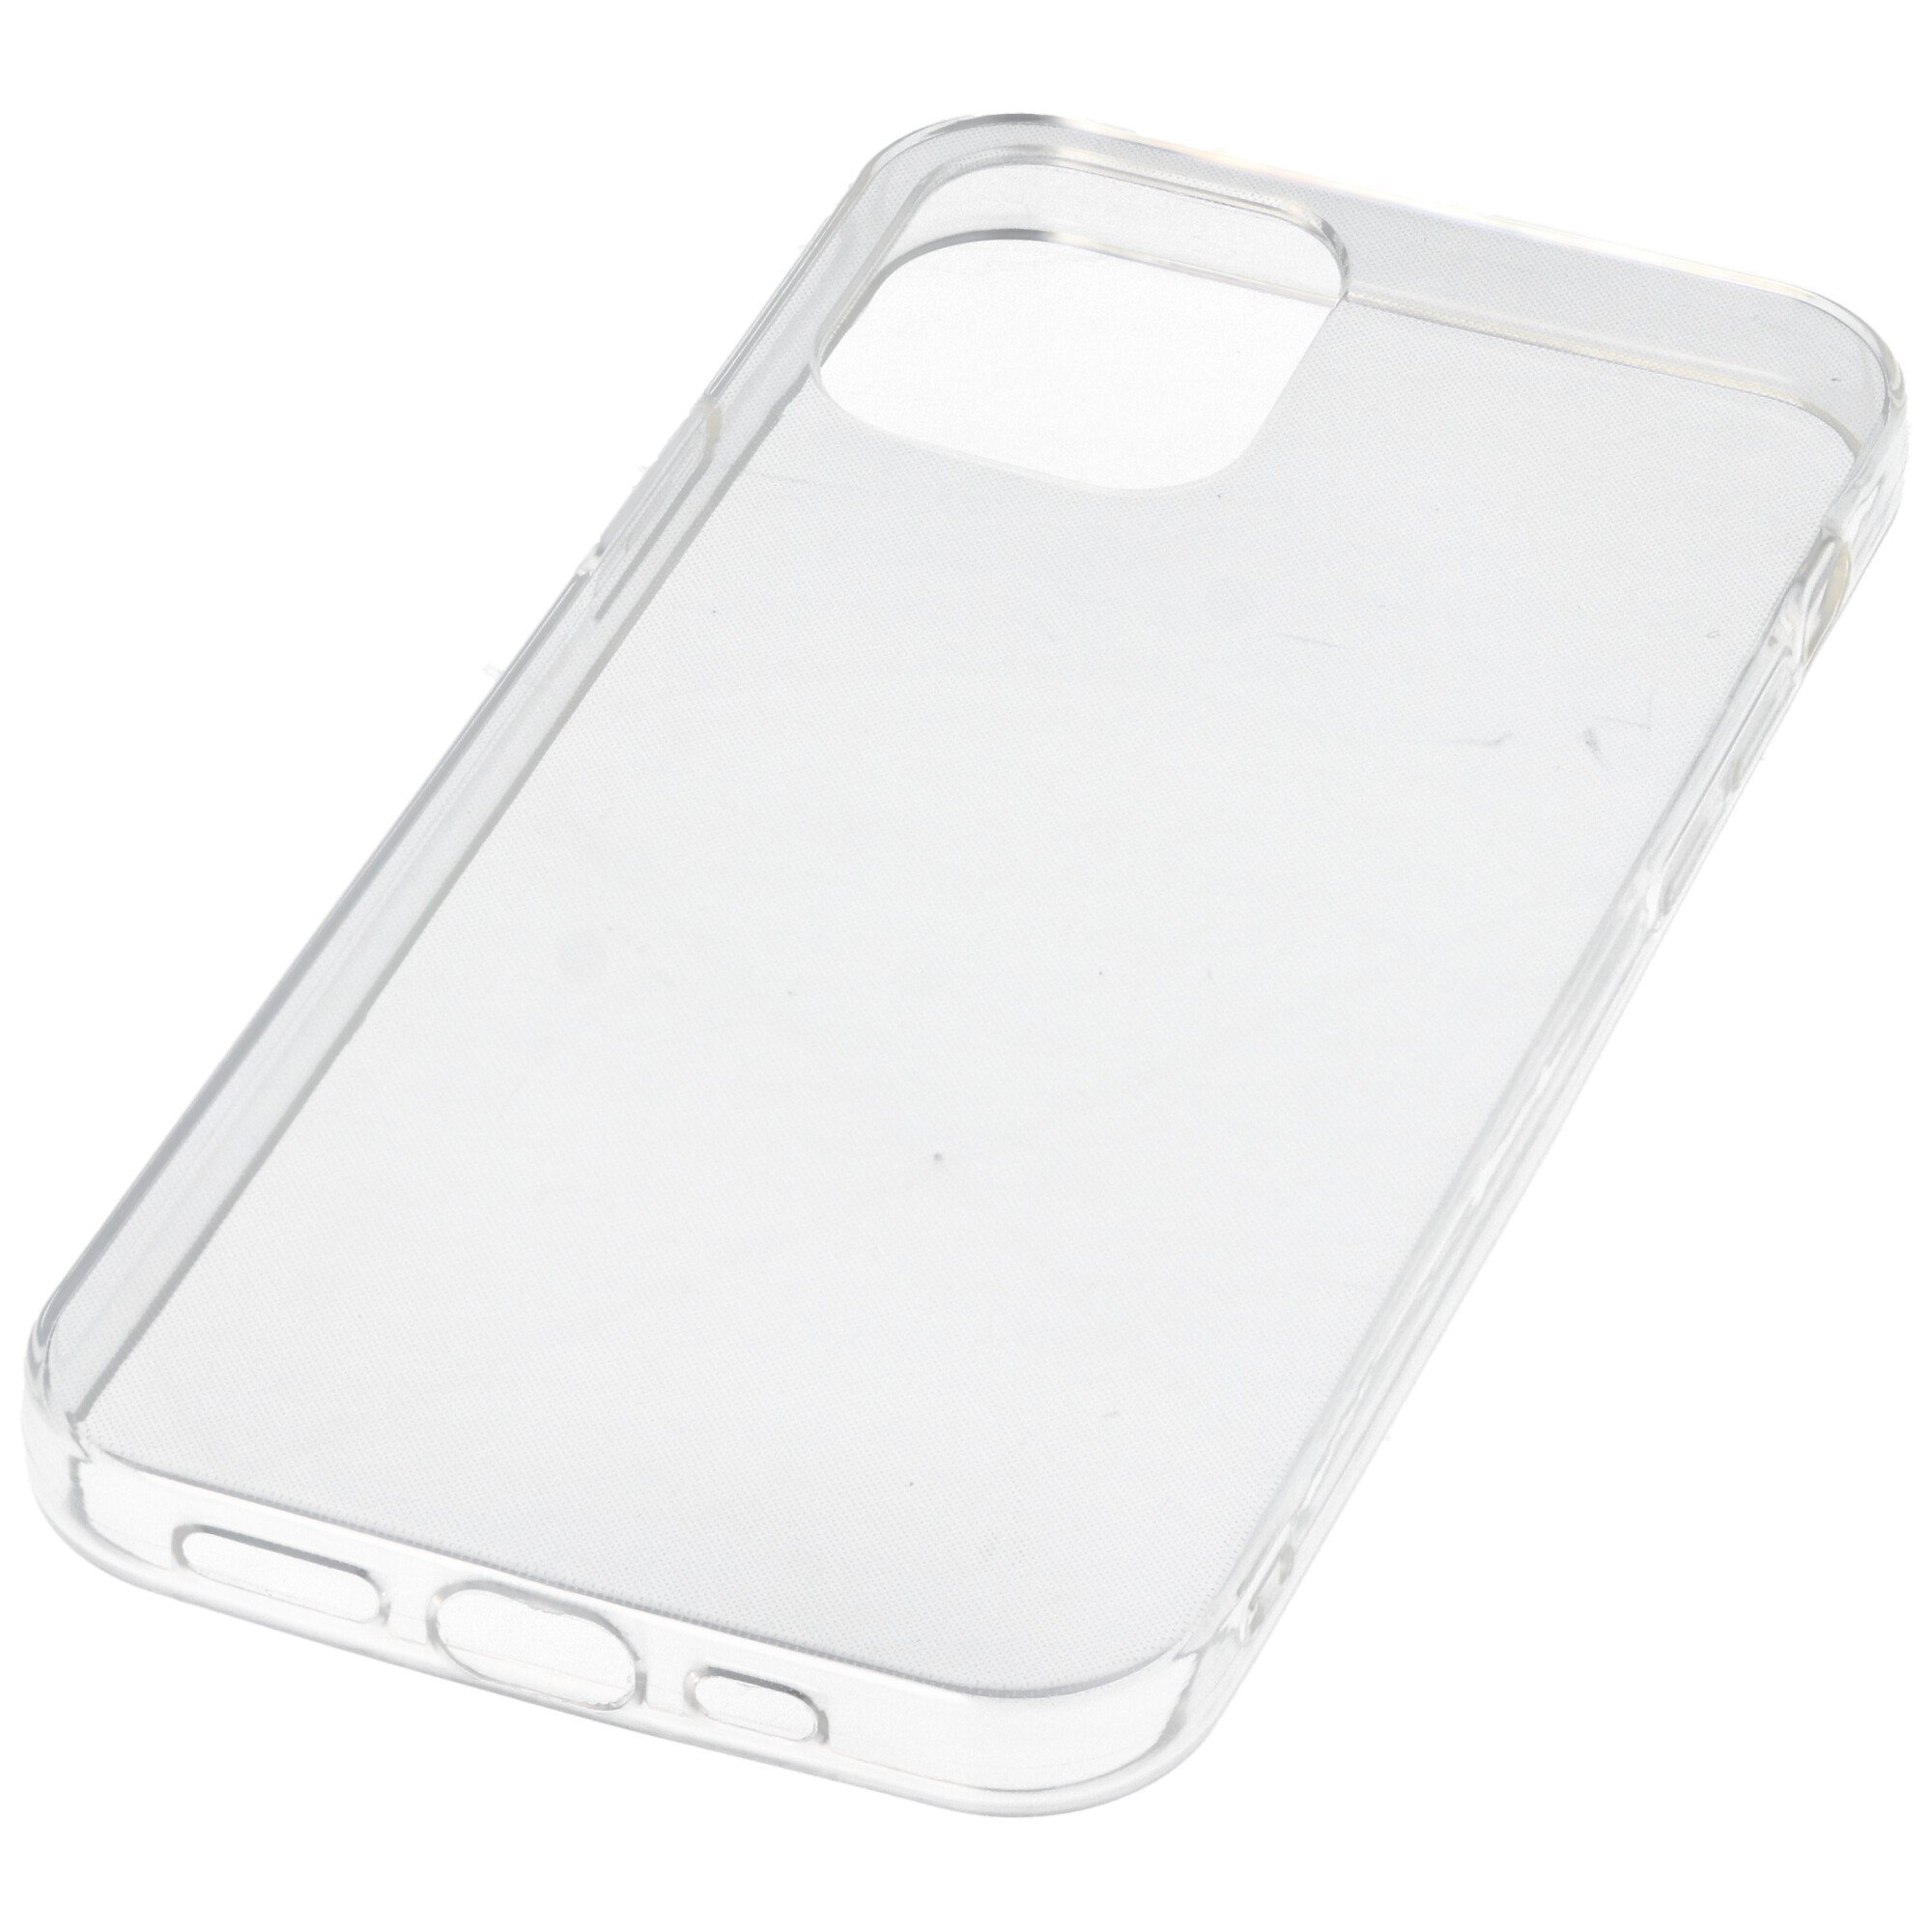 Hülle passend für Apple iPhone 12 / 12 Pro 6 Zoll - transparente Schutzhülle, Anti-Gelb Luftkissen Fallschutz Silikon Handyhülle robustes TPU Case